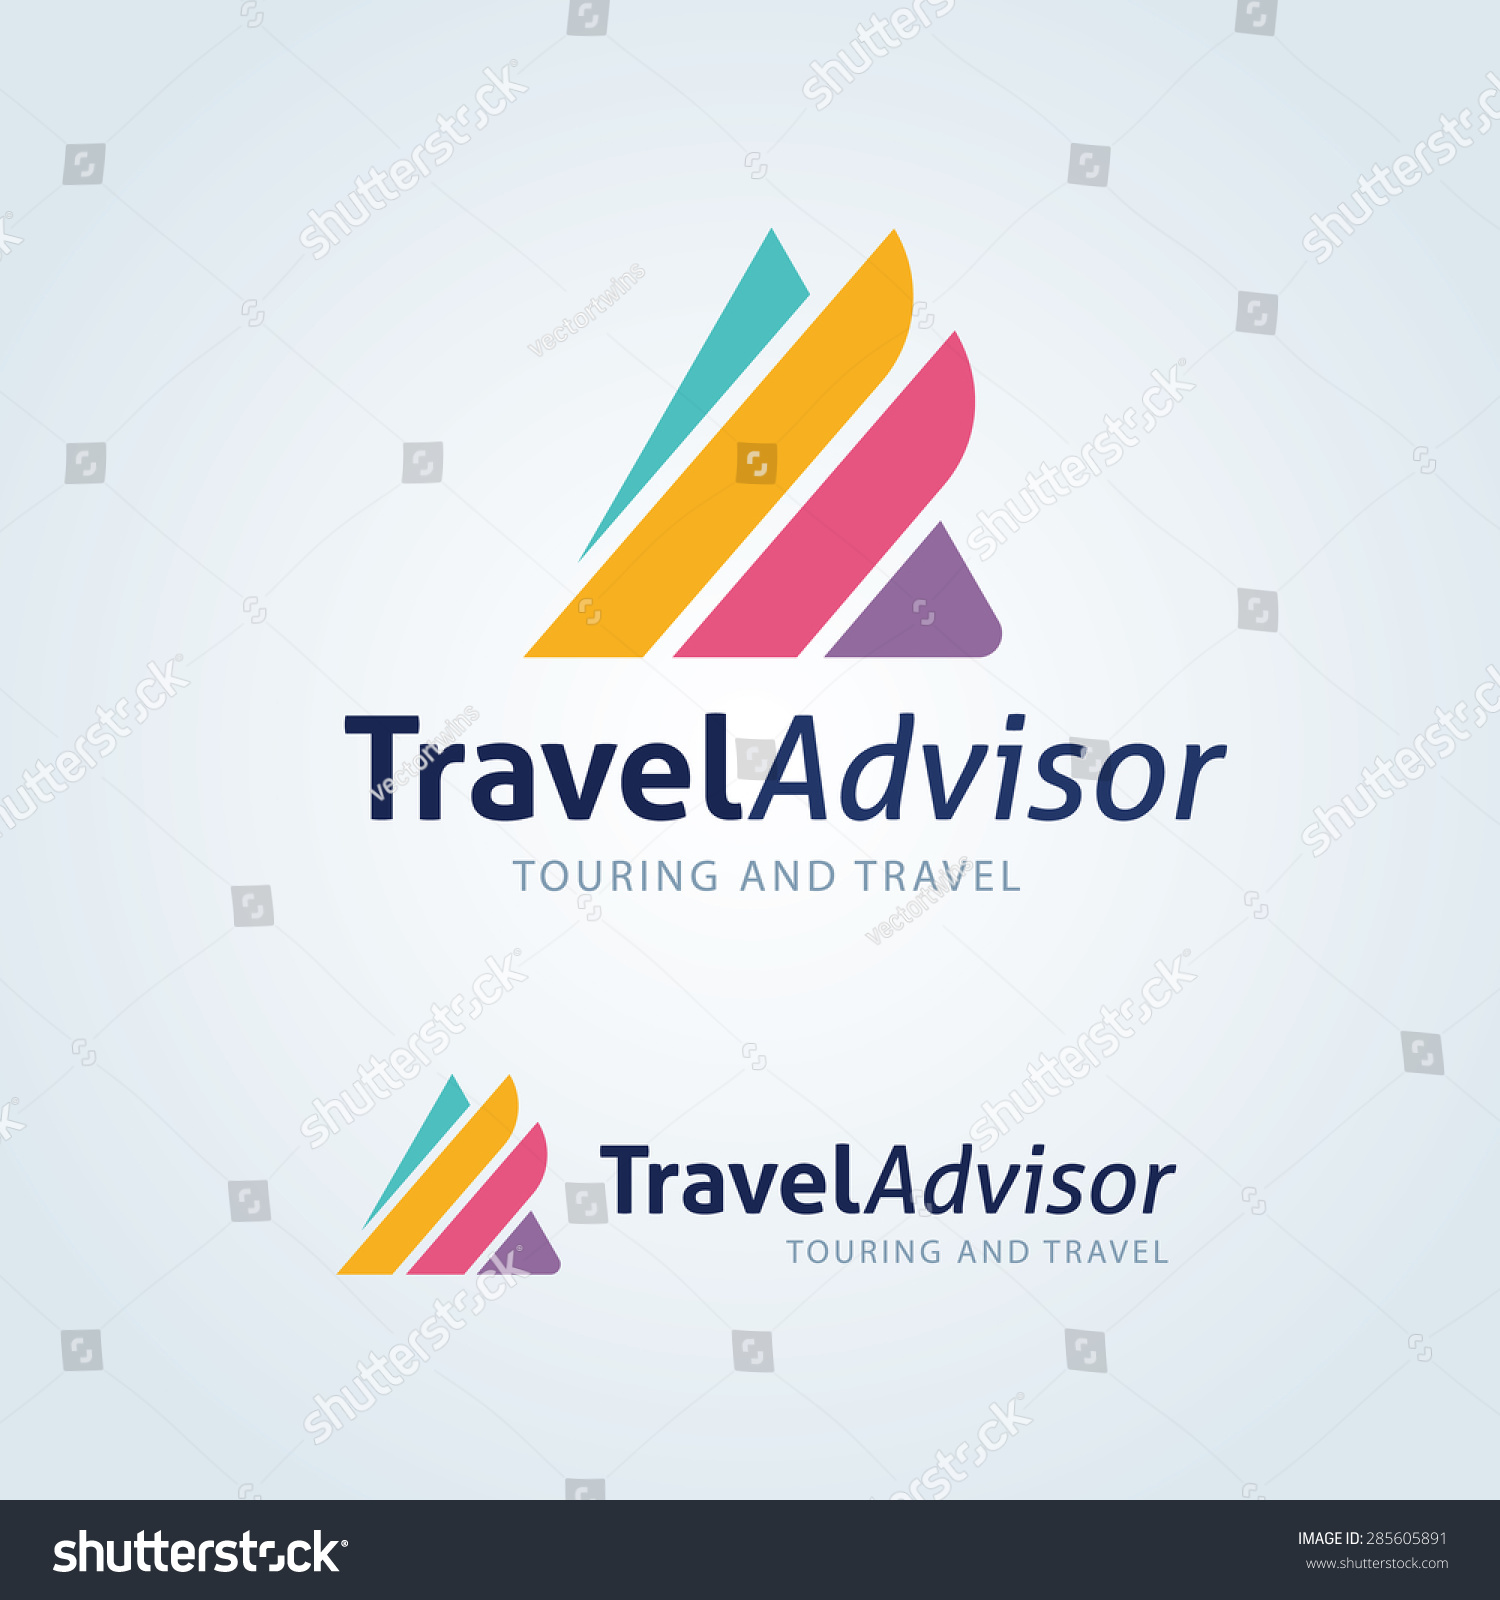 Travel Vector Logo Template - 285605891 : Shutterstock